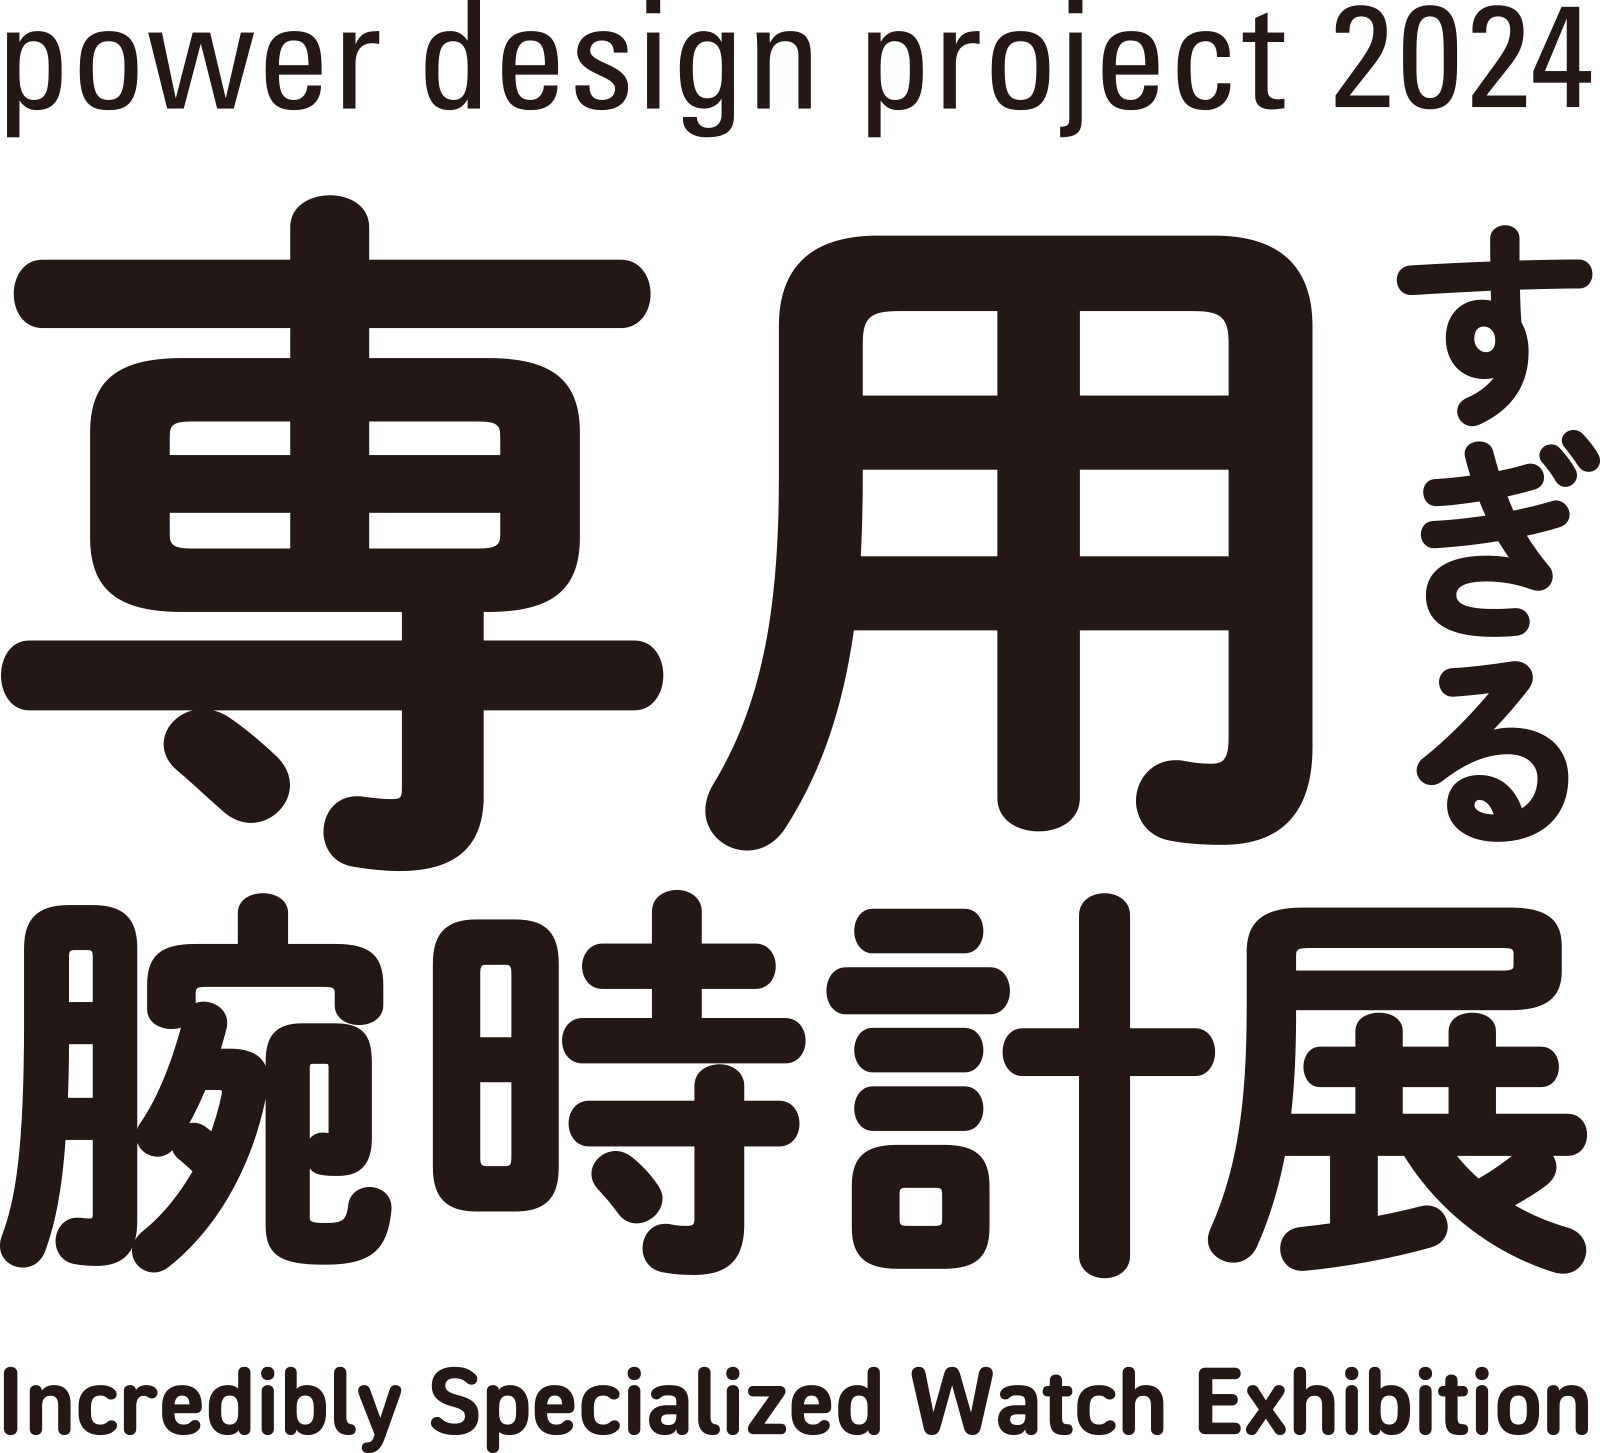 Power Design Project 2024 専用すぎる腕時計展